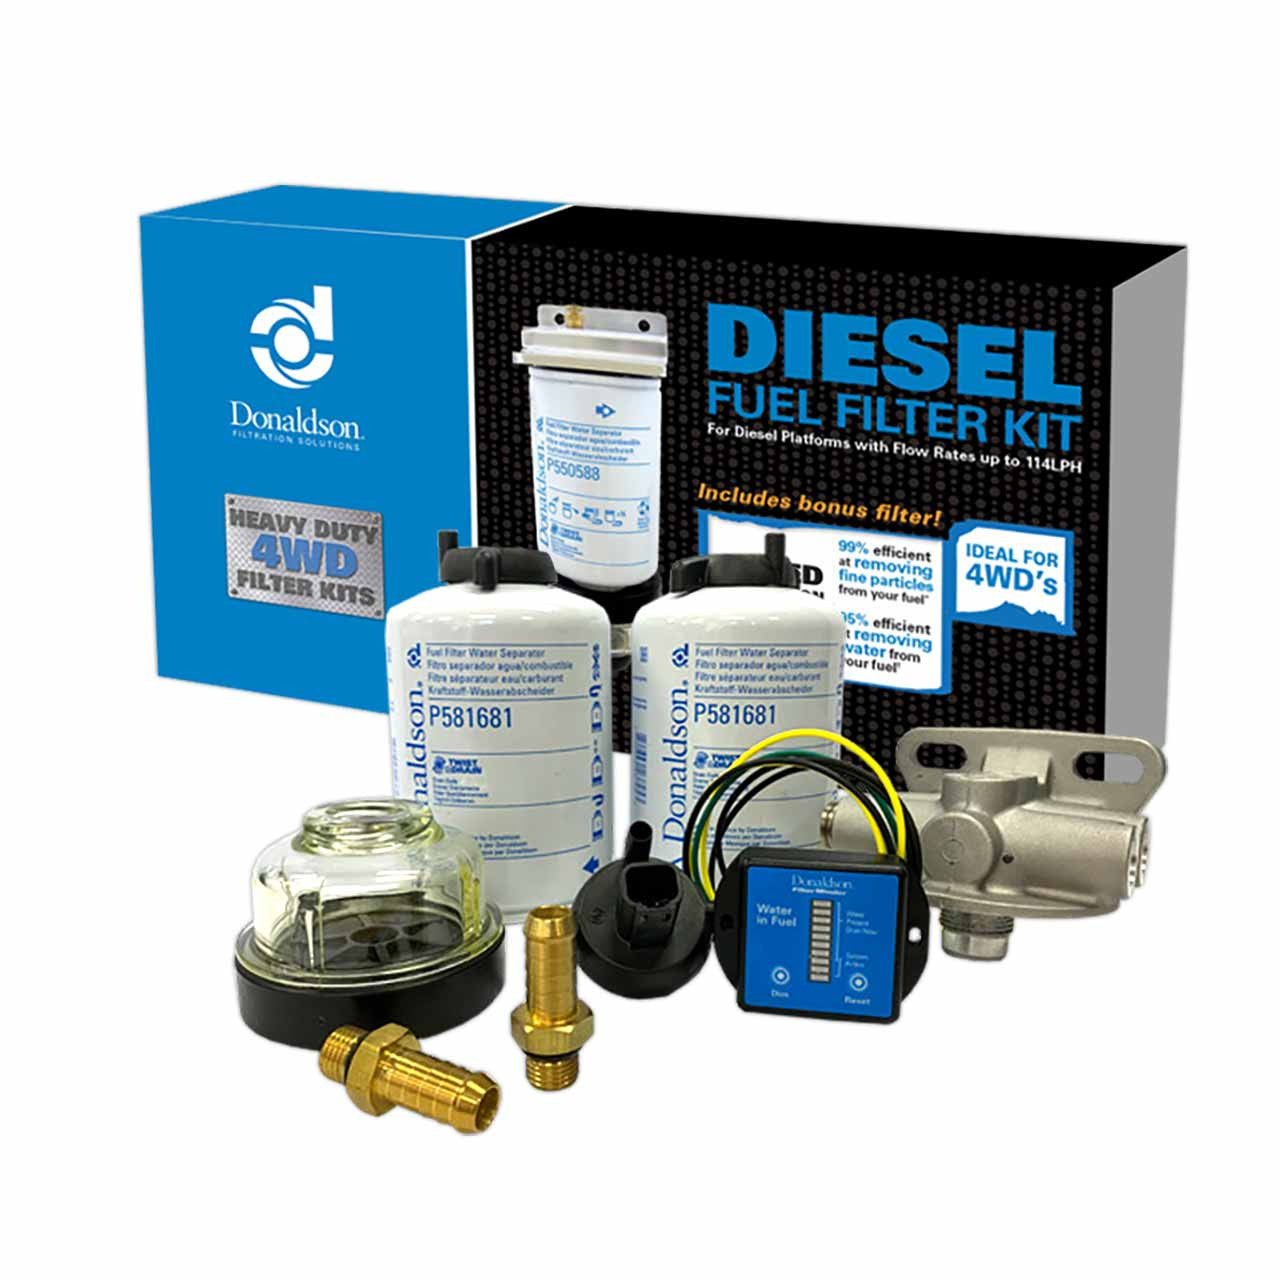 X900170 Donaldson Diesel Fuel Filter Kit with Sensor - 3 Micron Flow Rates max.245lph